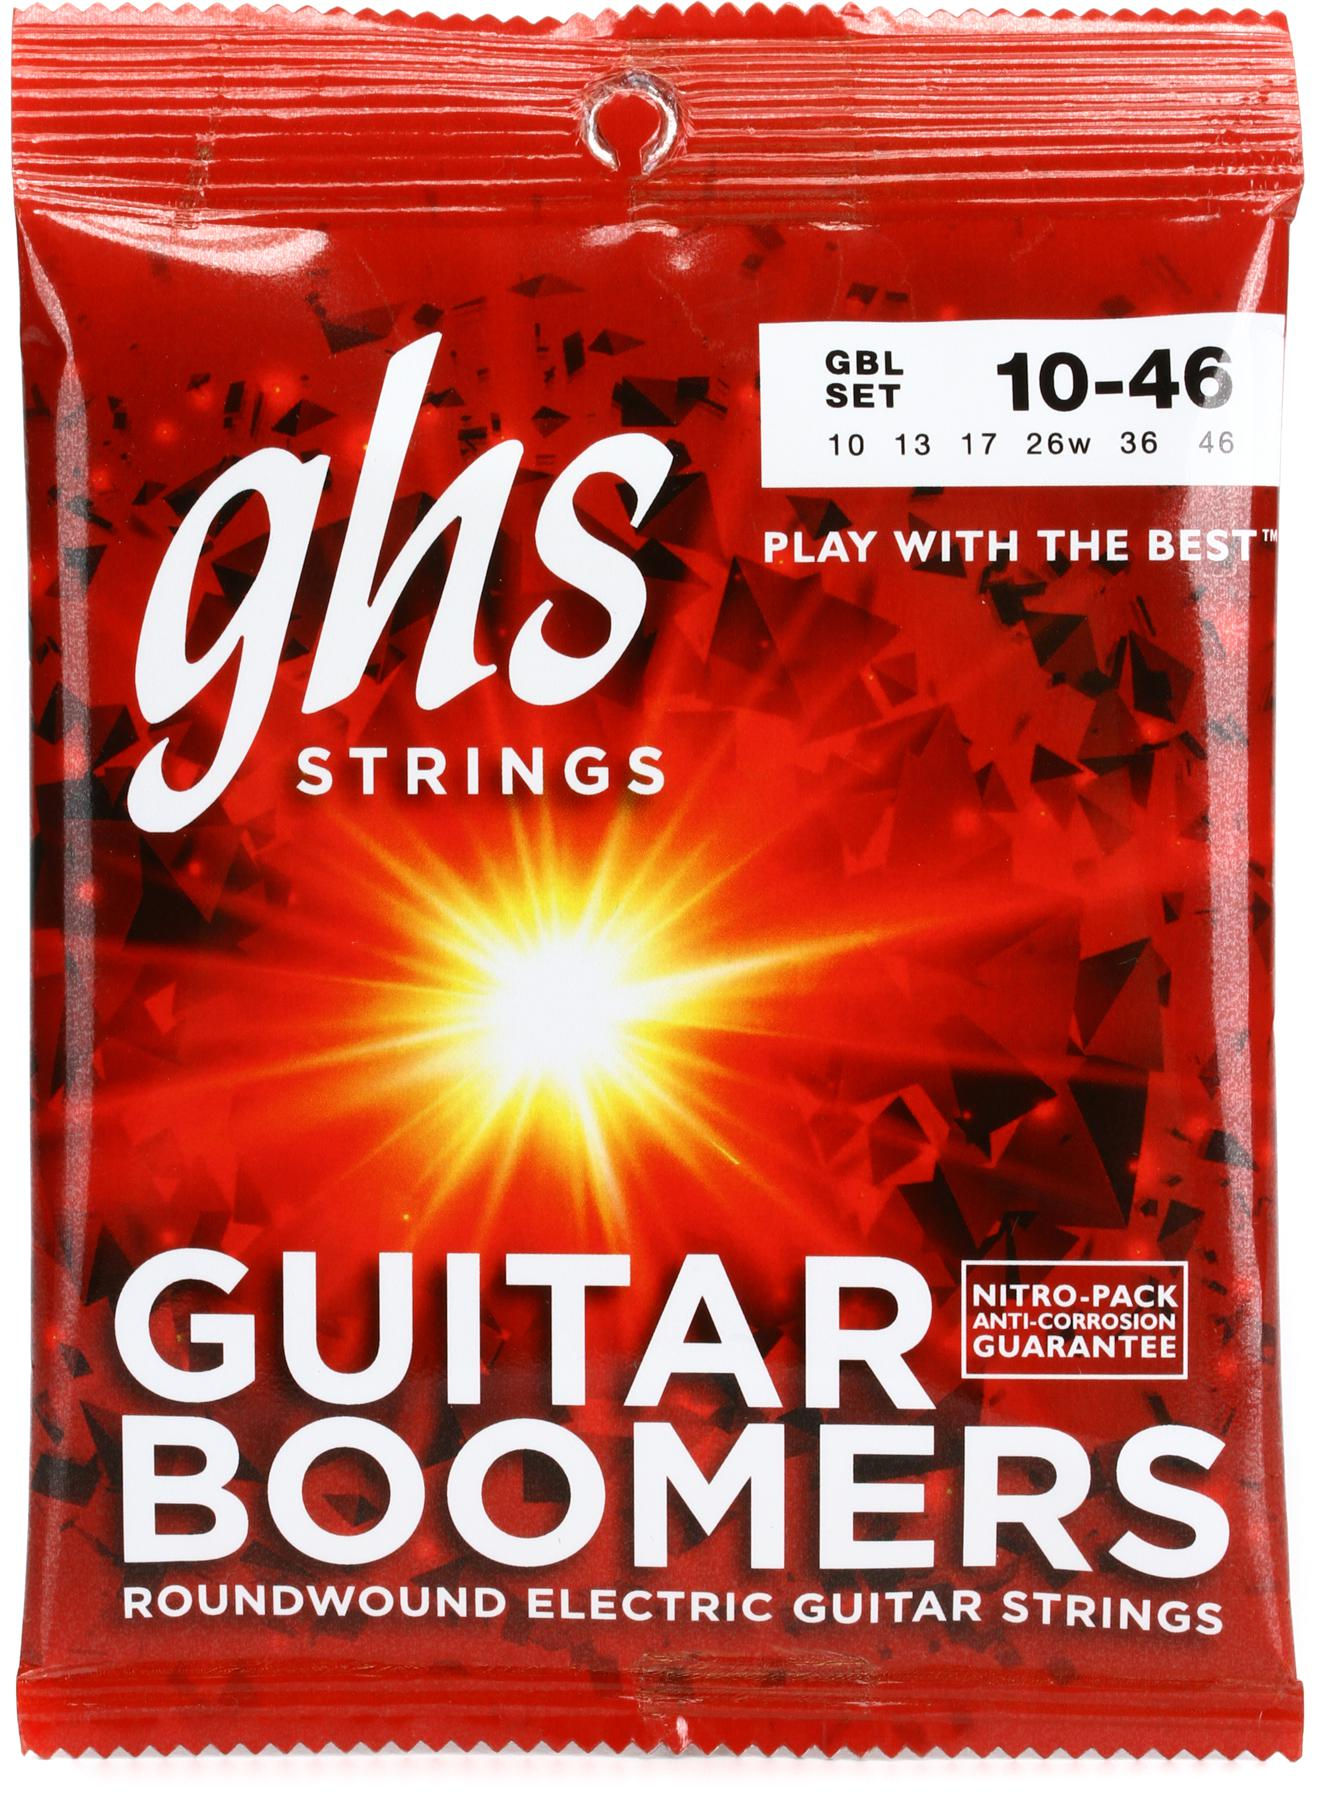 GHS GBL Guitar Boomers